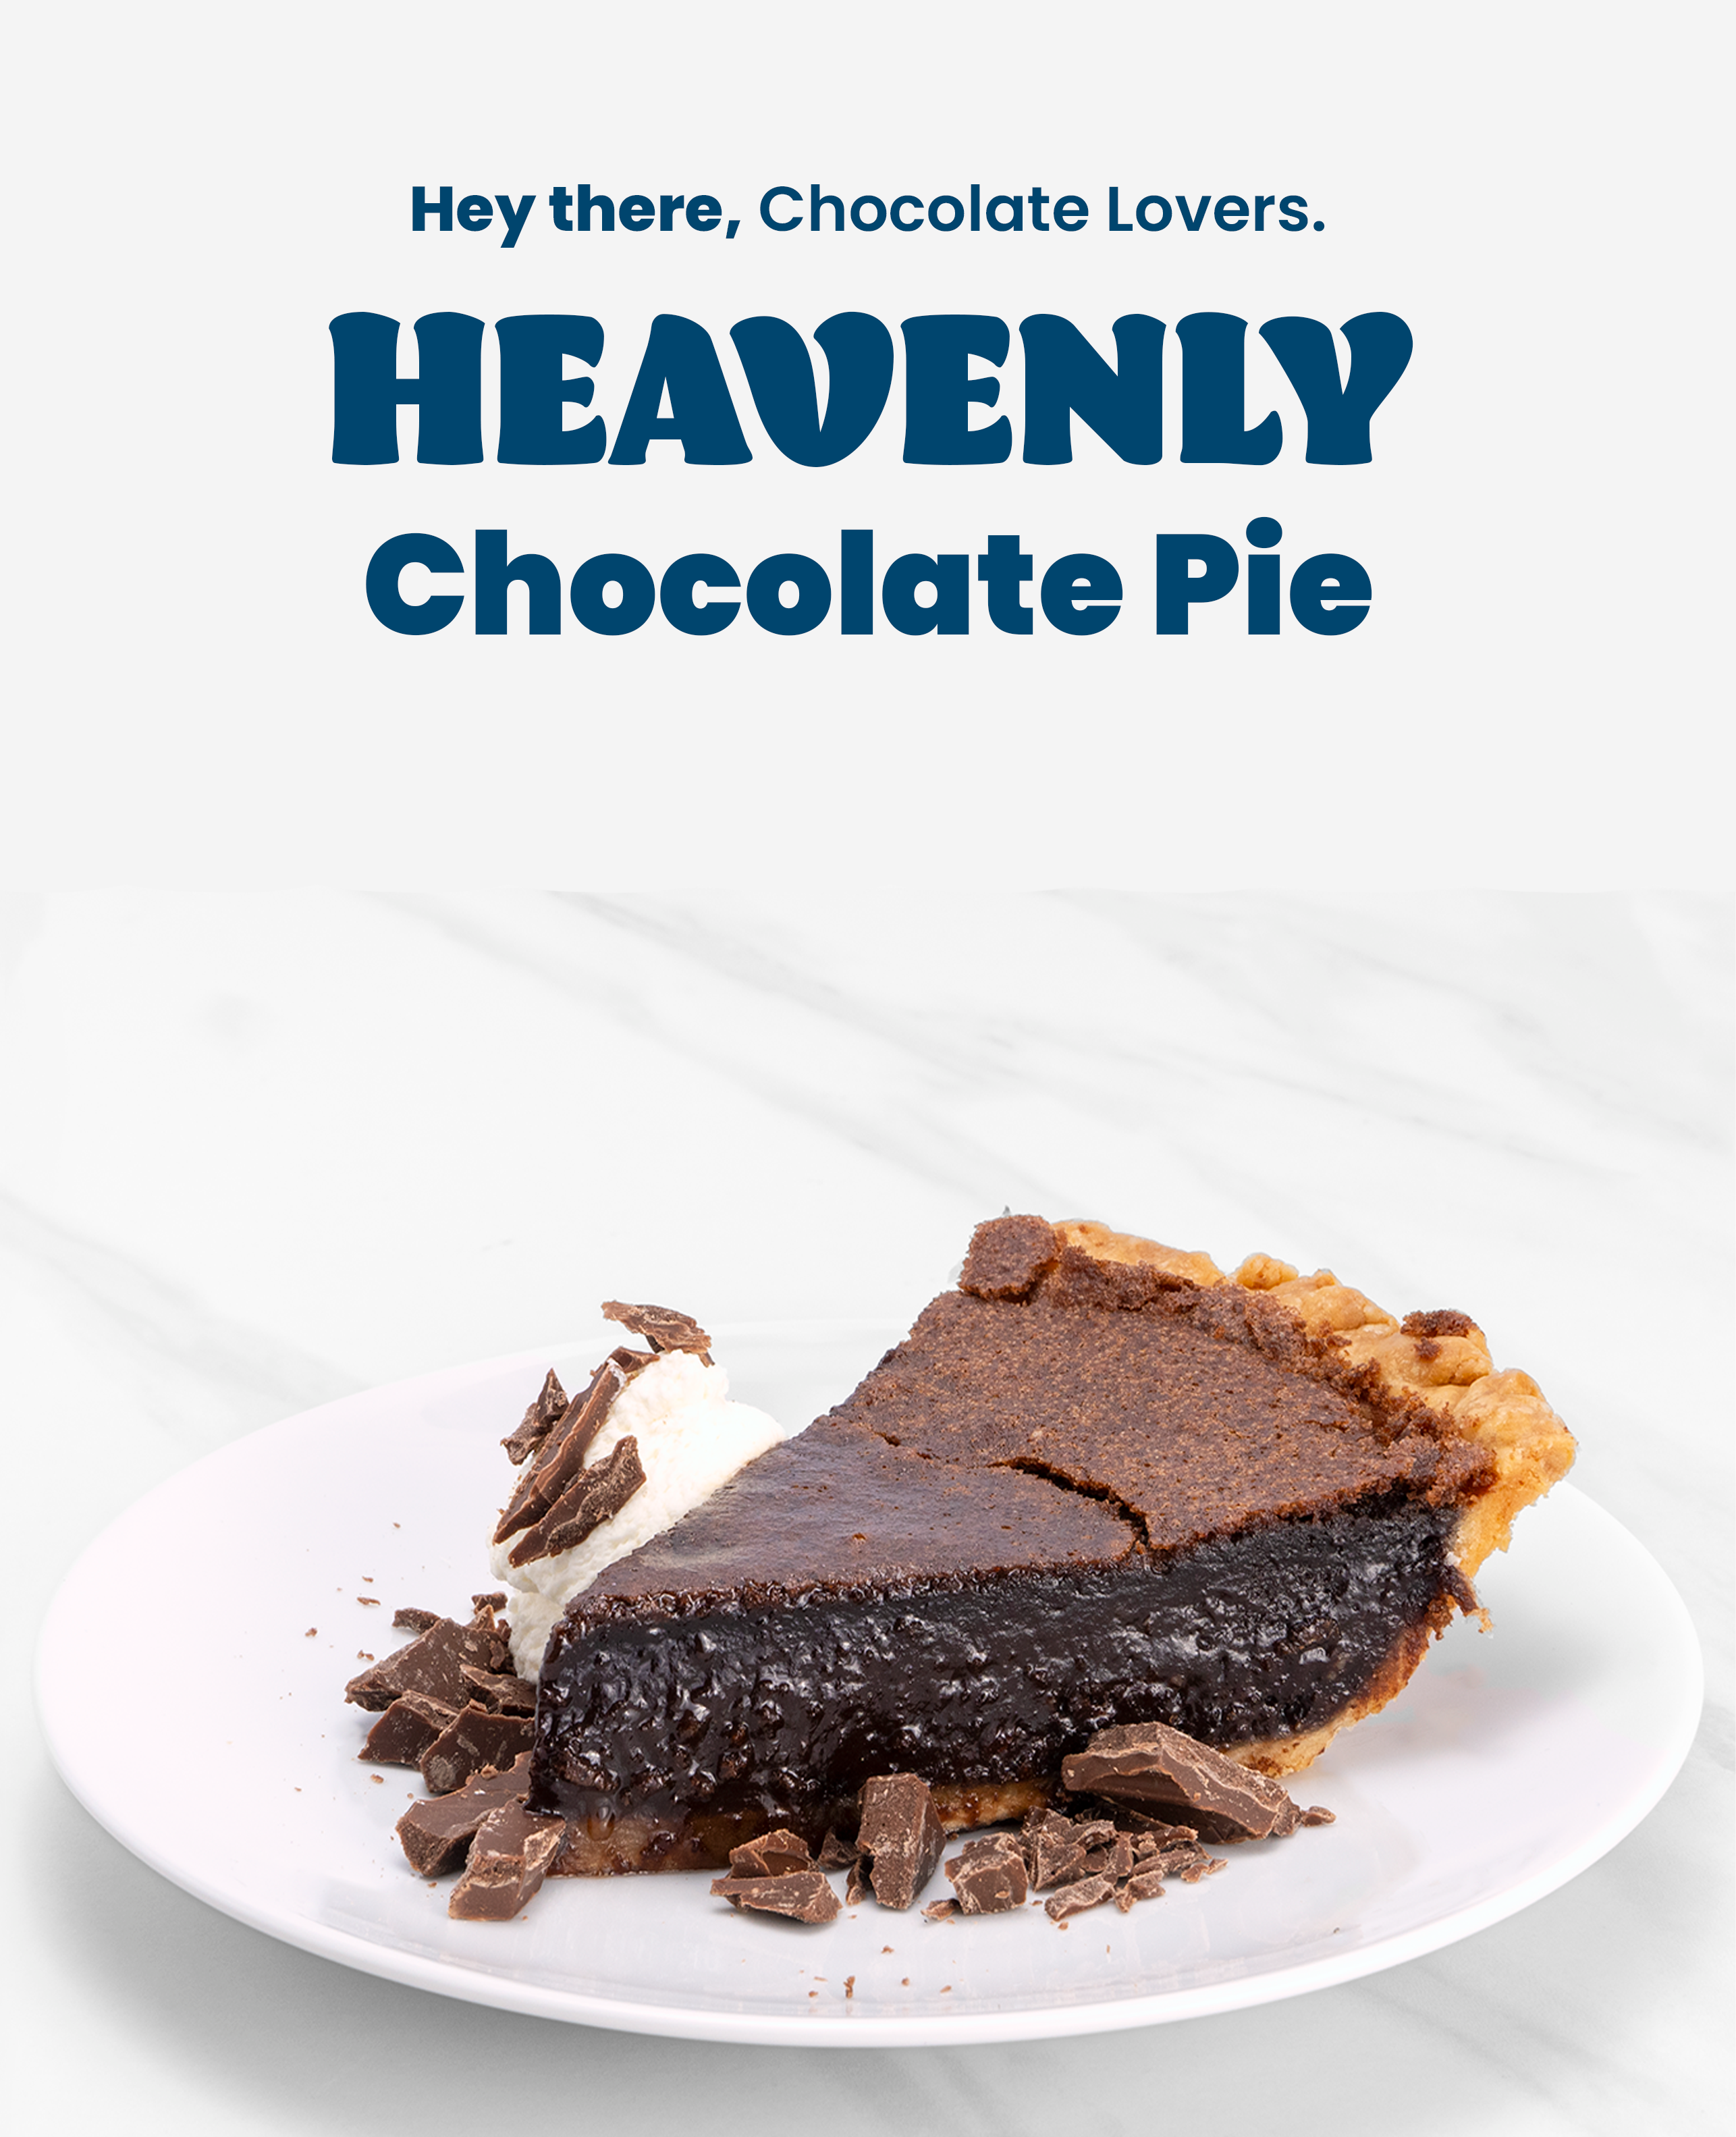 Hey there, Chocolate Lovers. Heavenly Chocolate Pie.